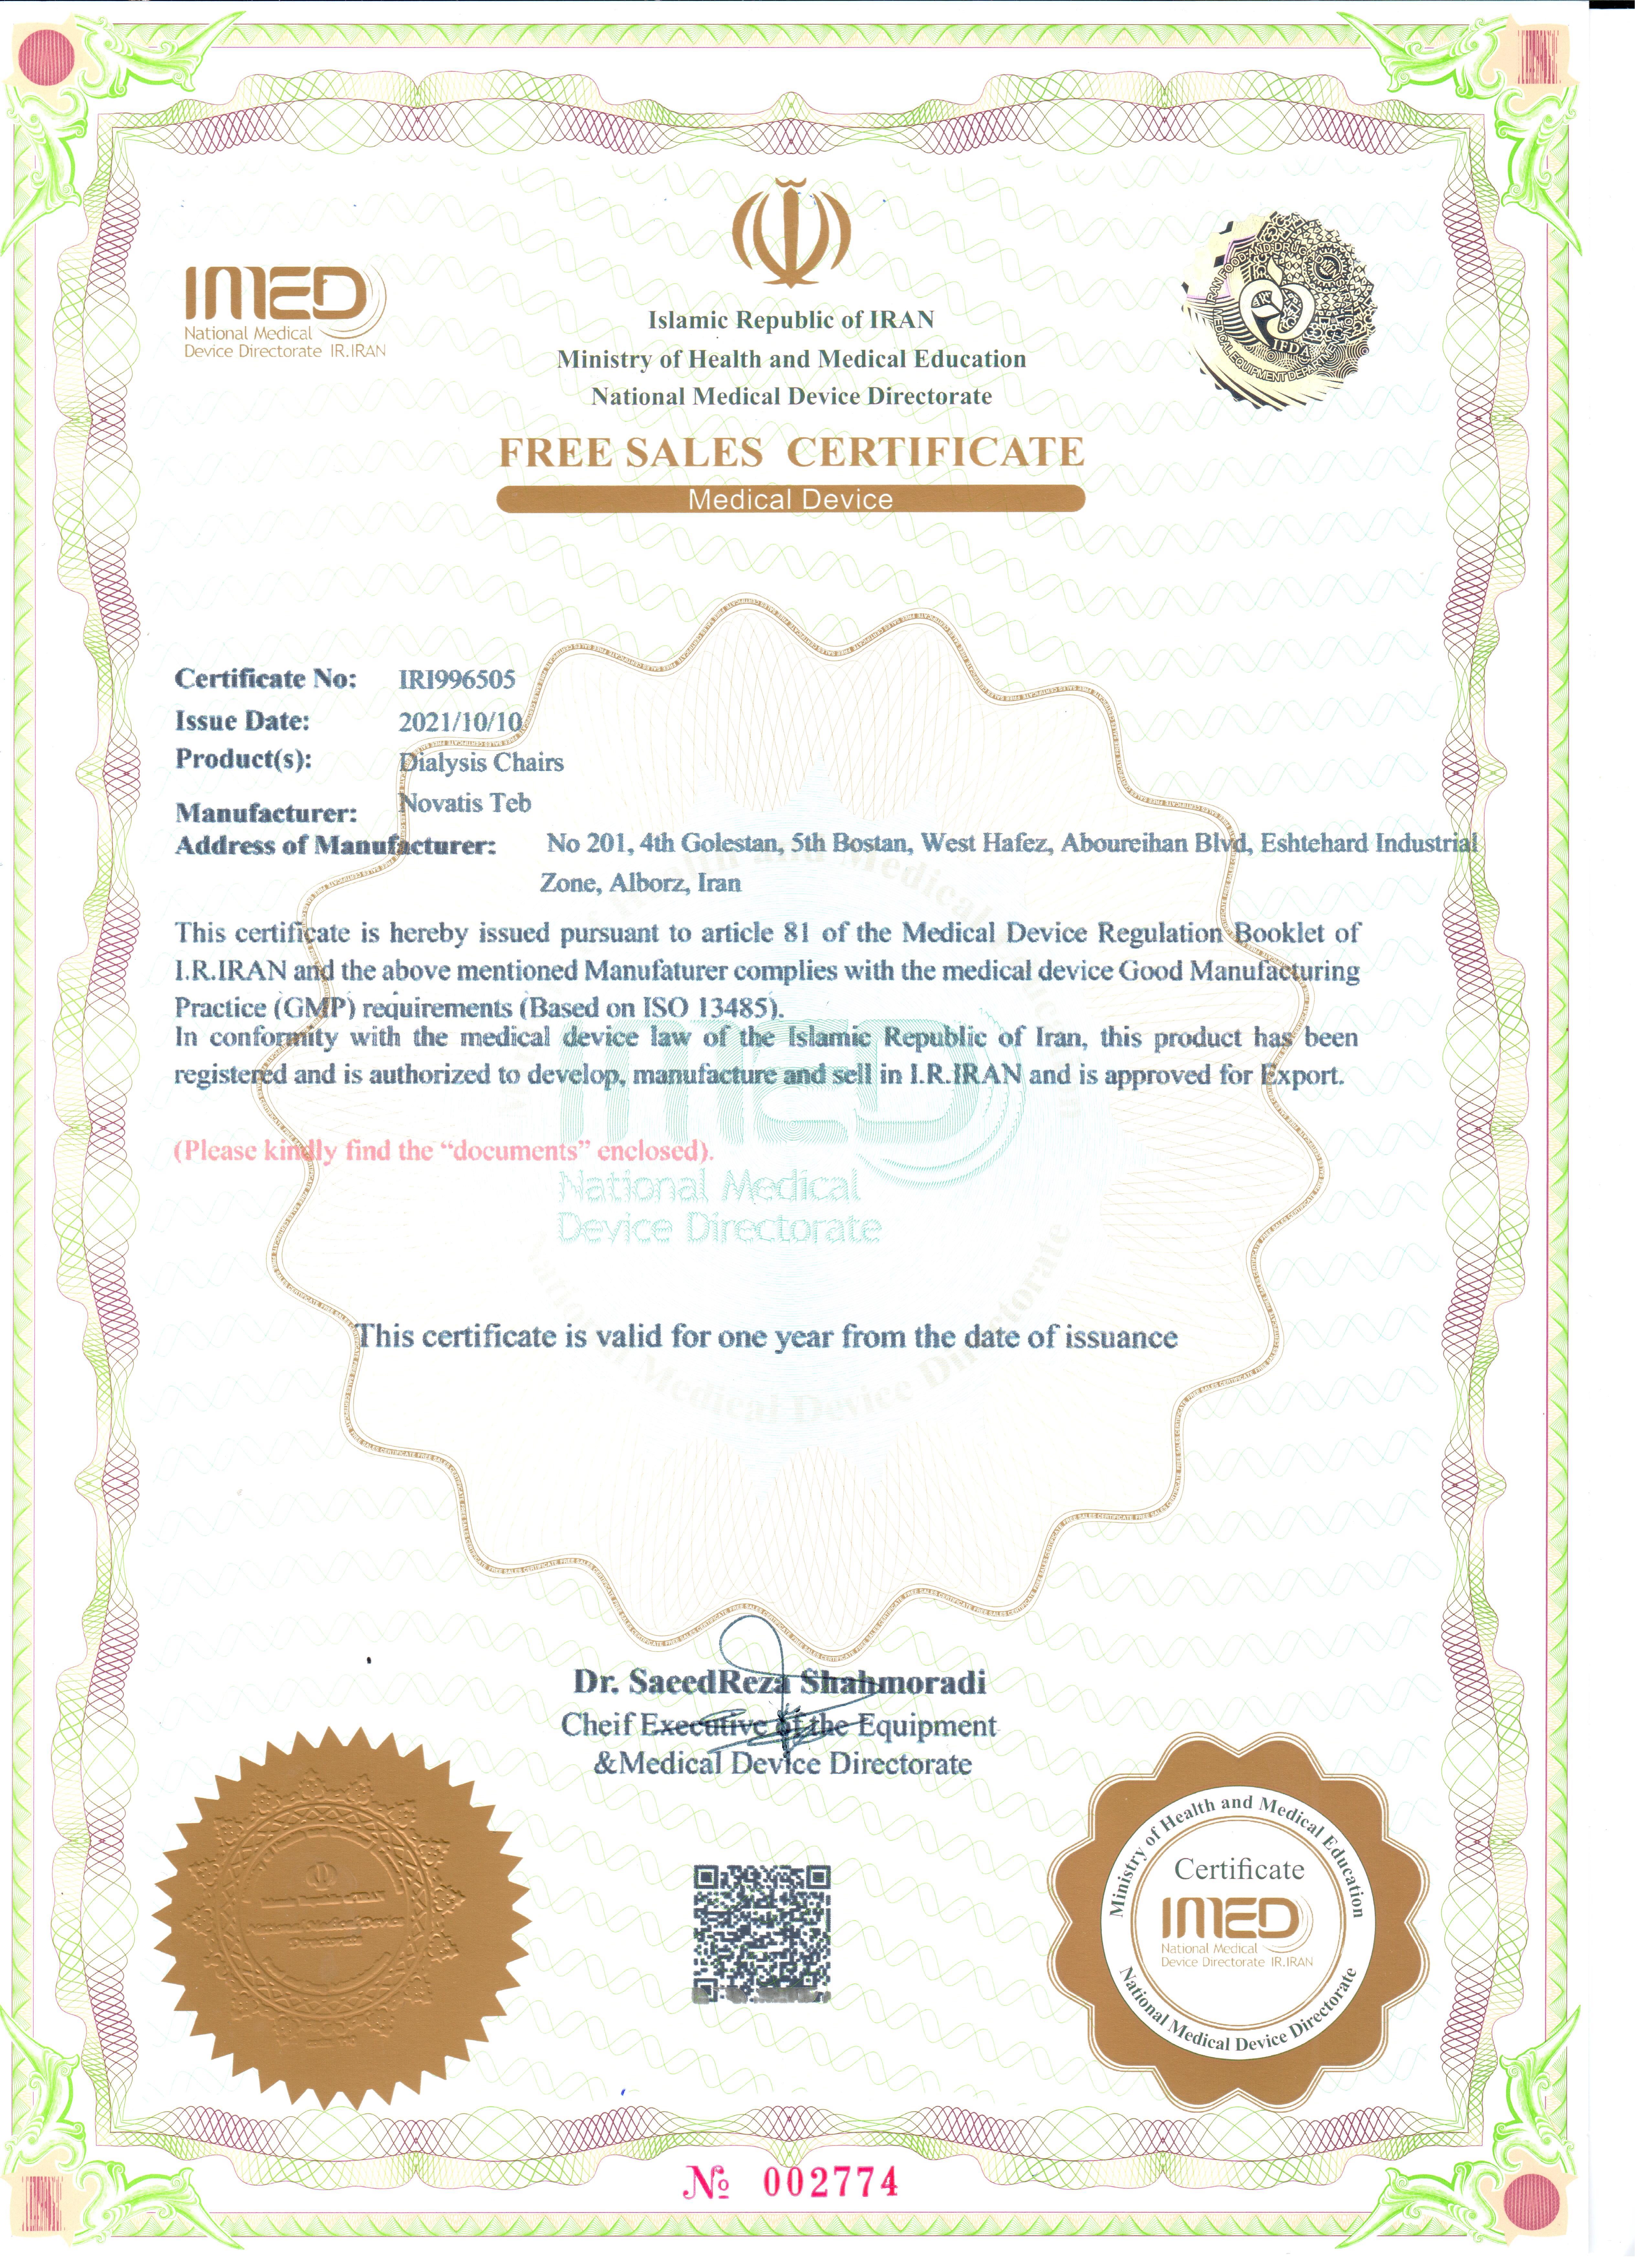 Hemoialysis Chair Free Sale Certificate